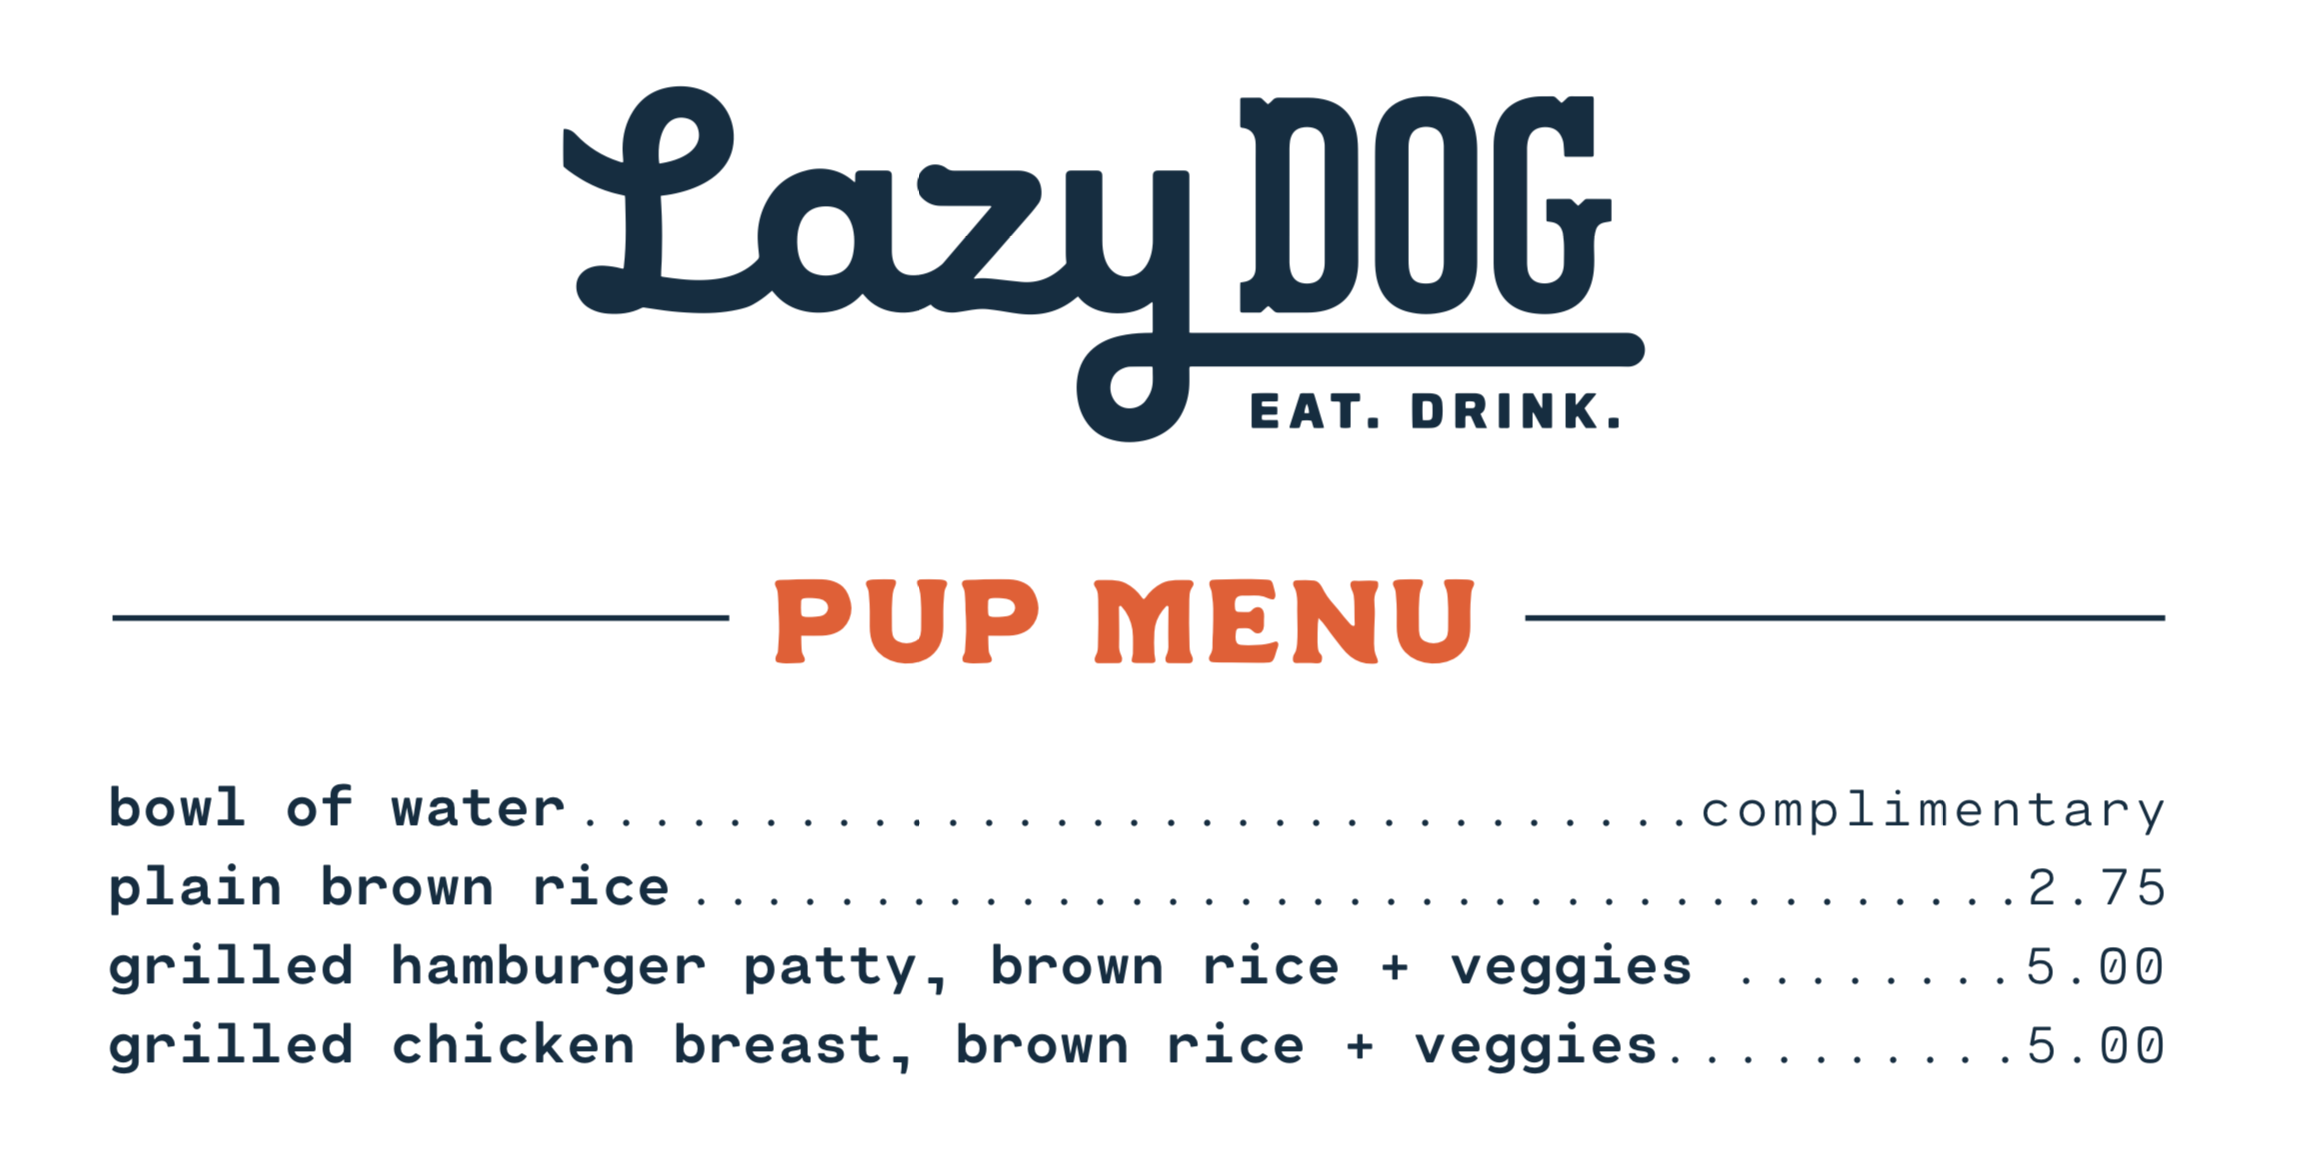 Lazy Dog Restaurant's "Pup Menu" Menu for dogs!